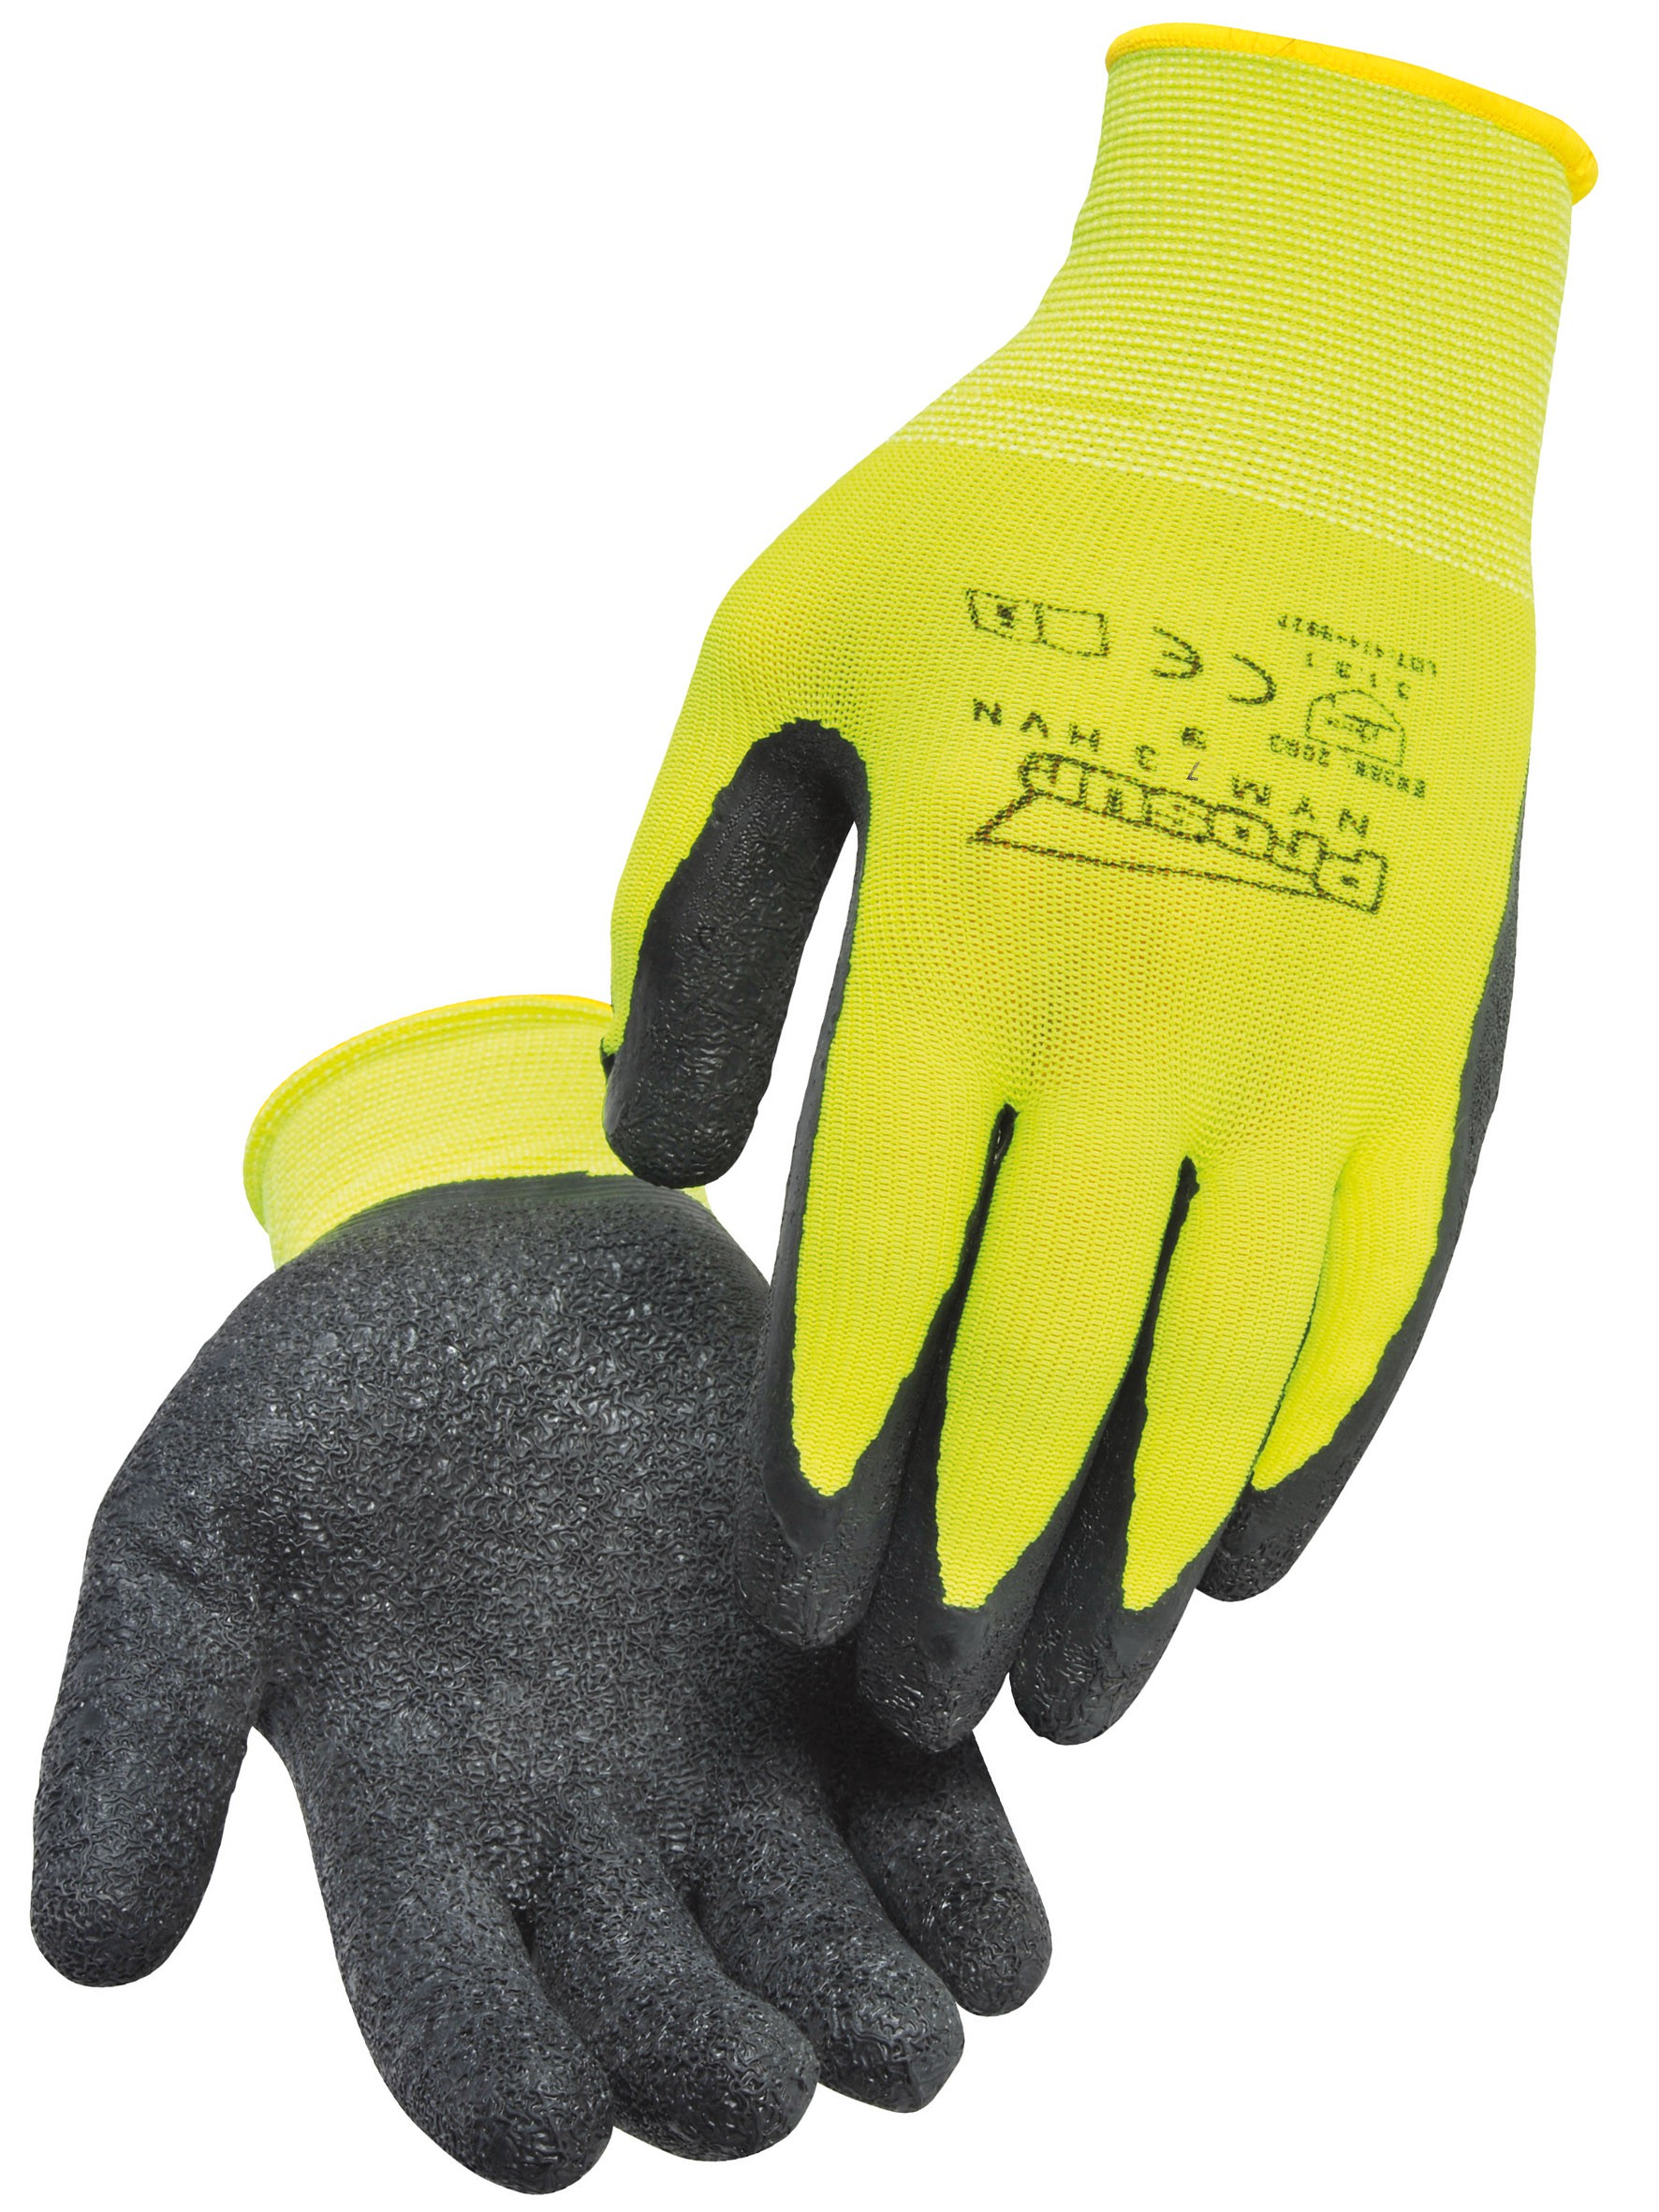 Handschuhe Latex warngelb Träger Polyamid Teilbeschichtung Latex